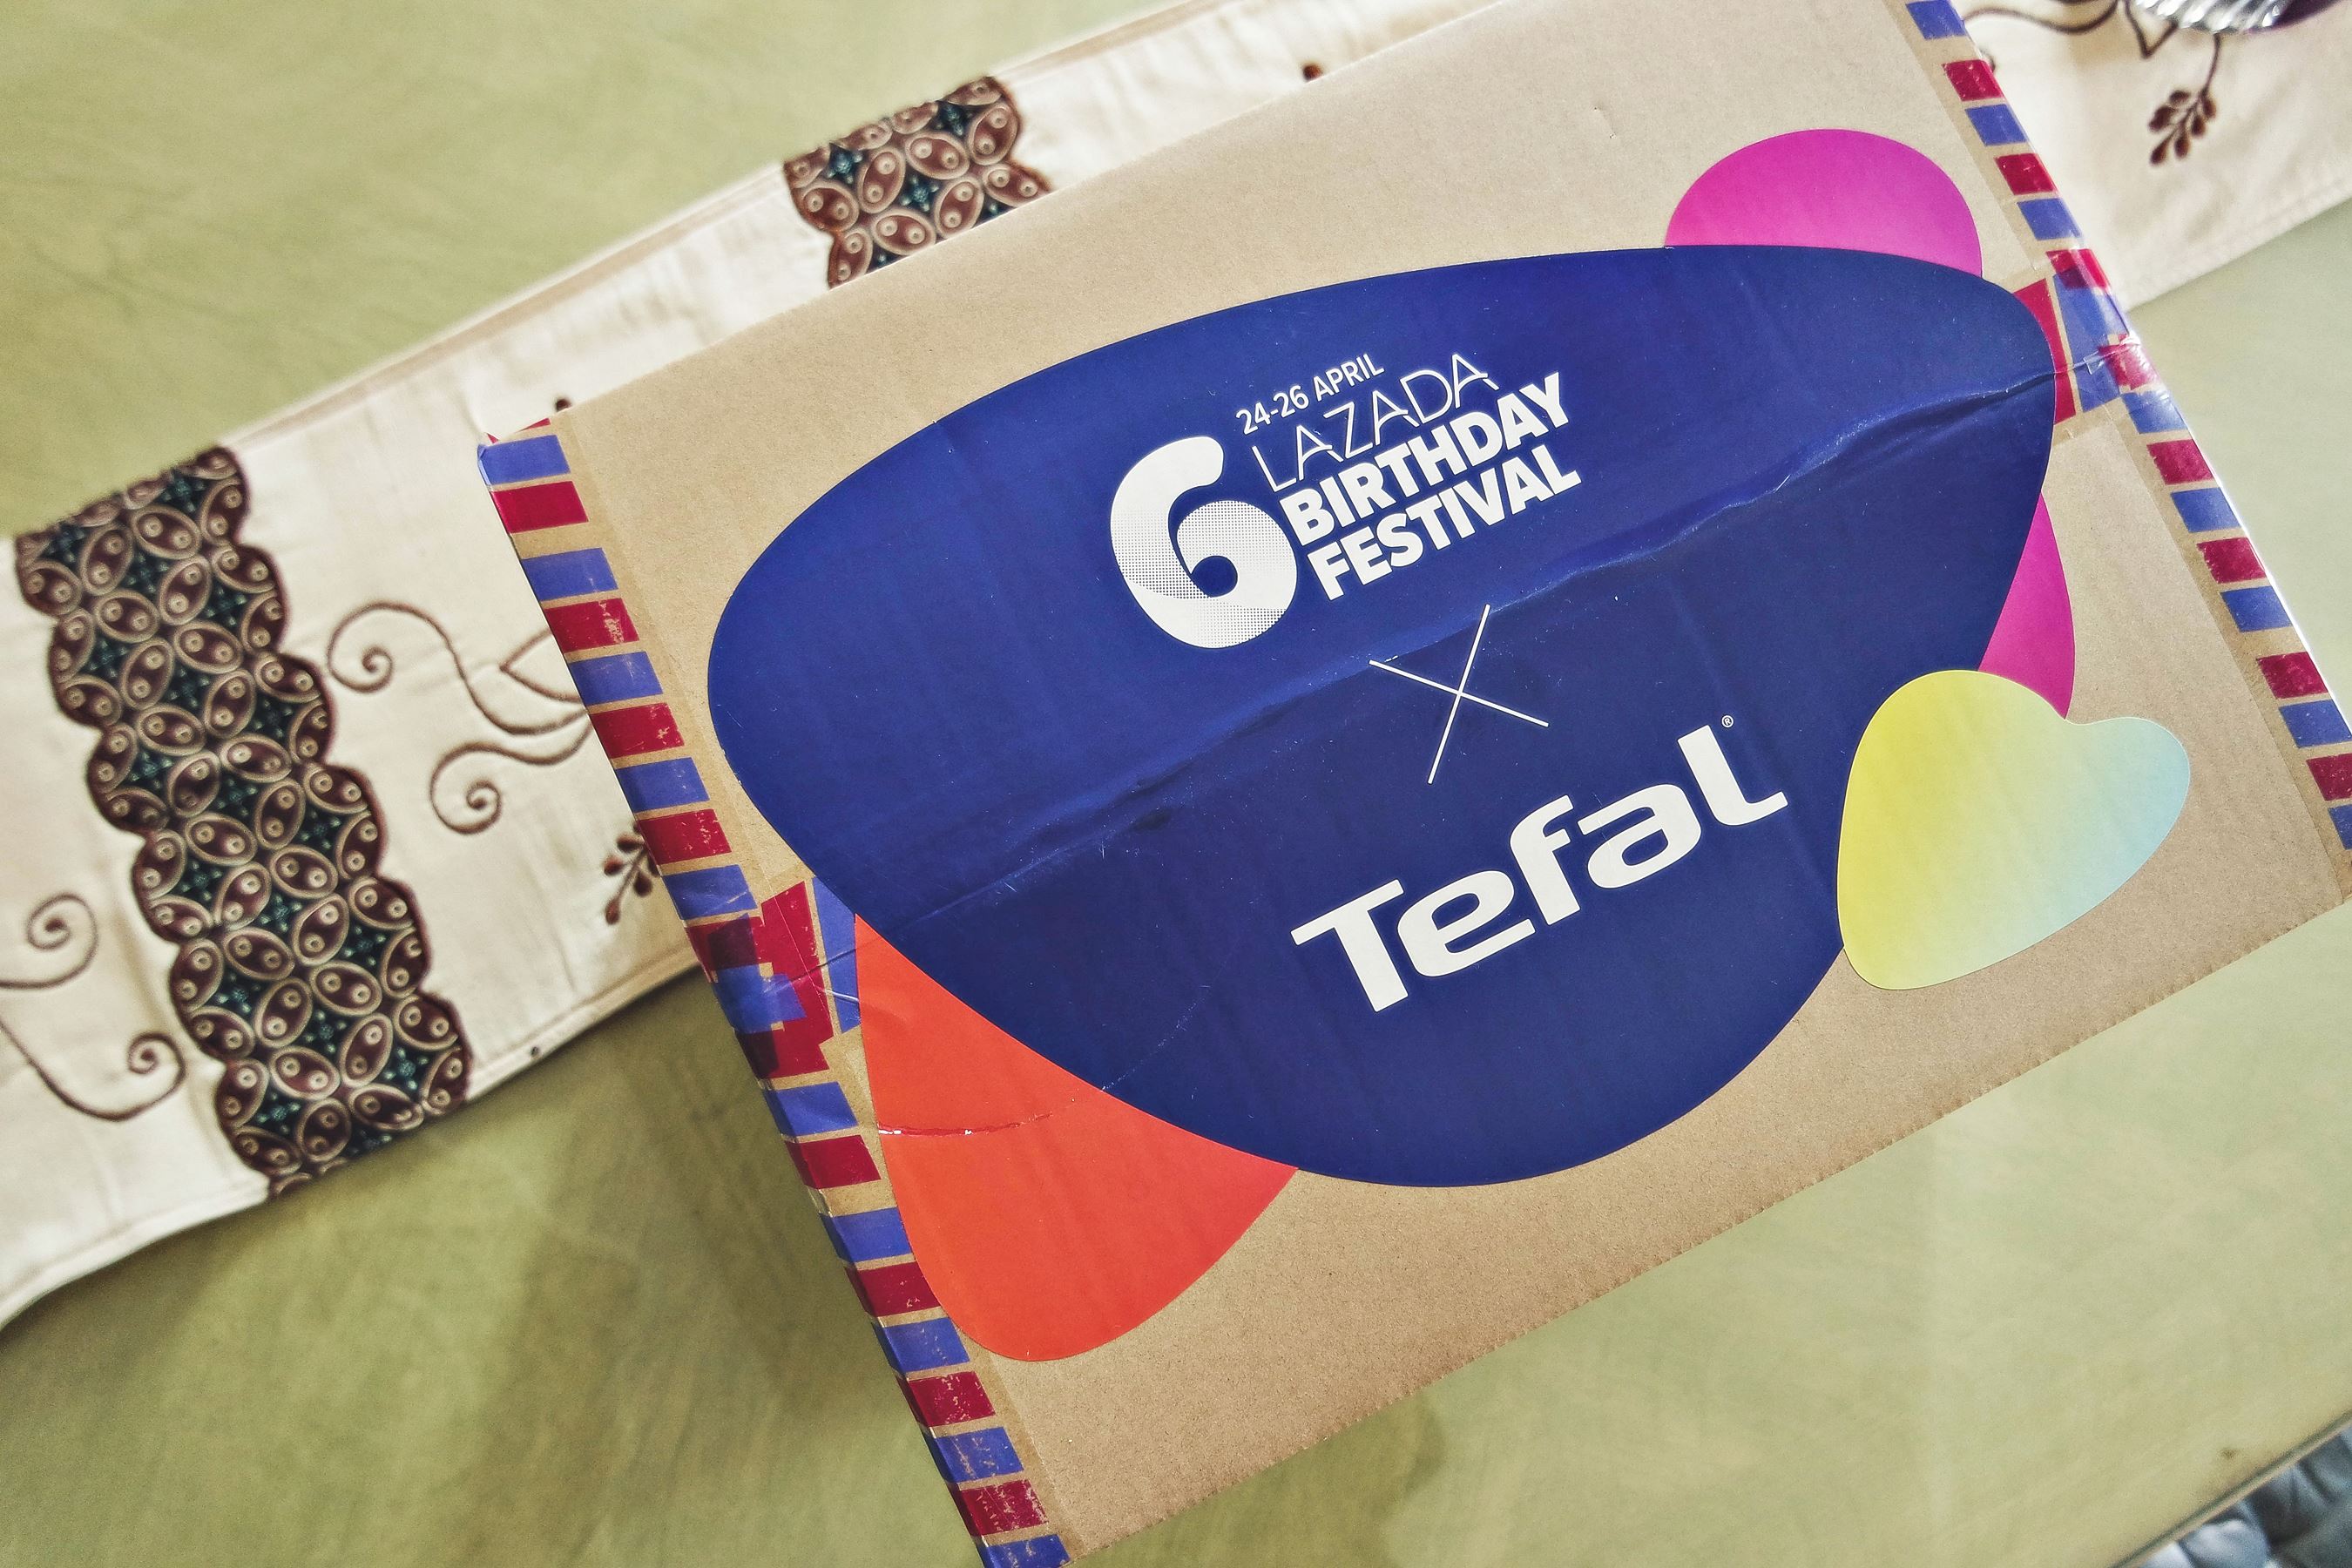  Tefal X Lazada Birthday Festival 2018 Surprise Box